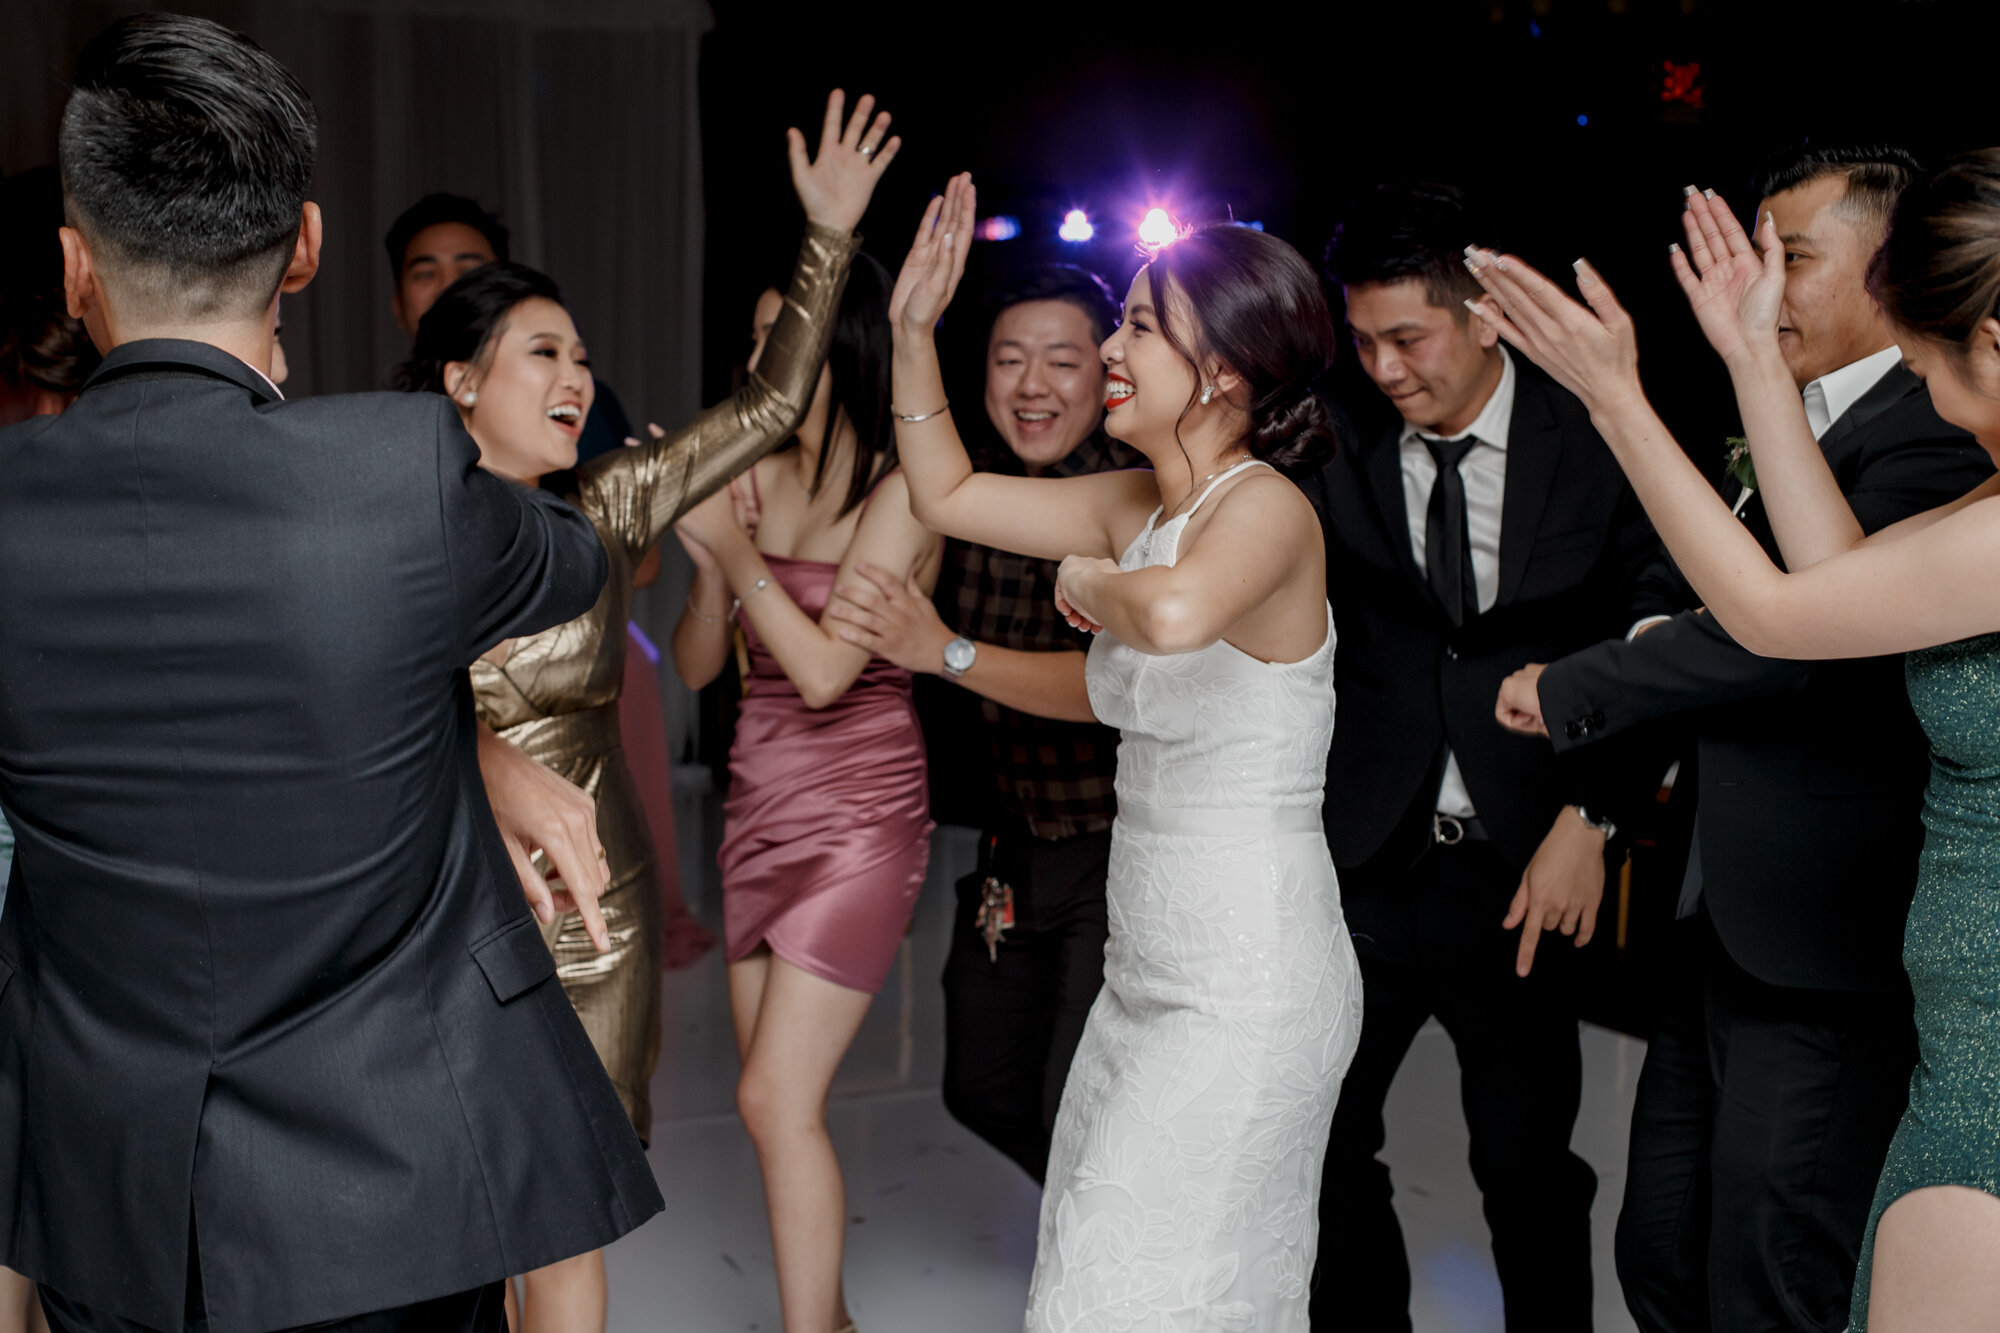 Dancing party. Urban Elegant East Asian Wedding at Chateau De L’Amour